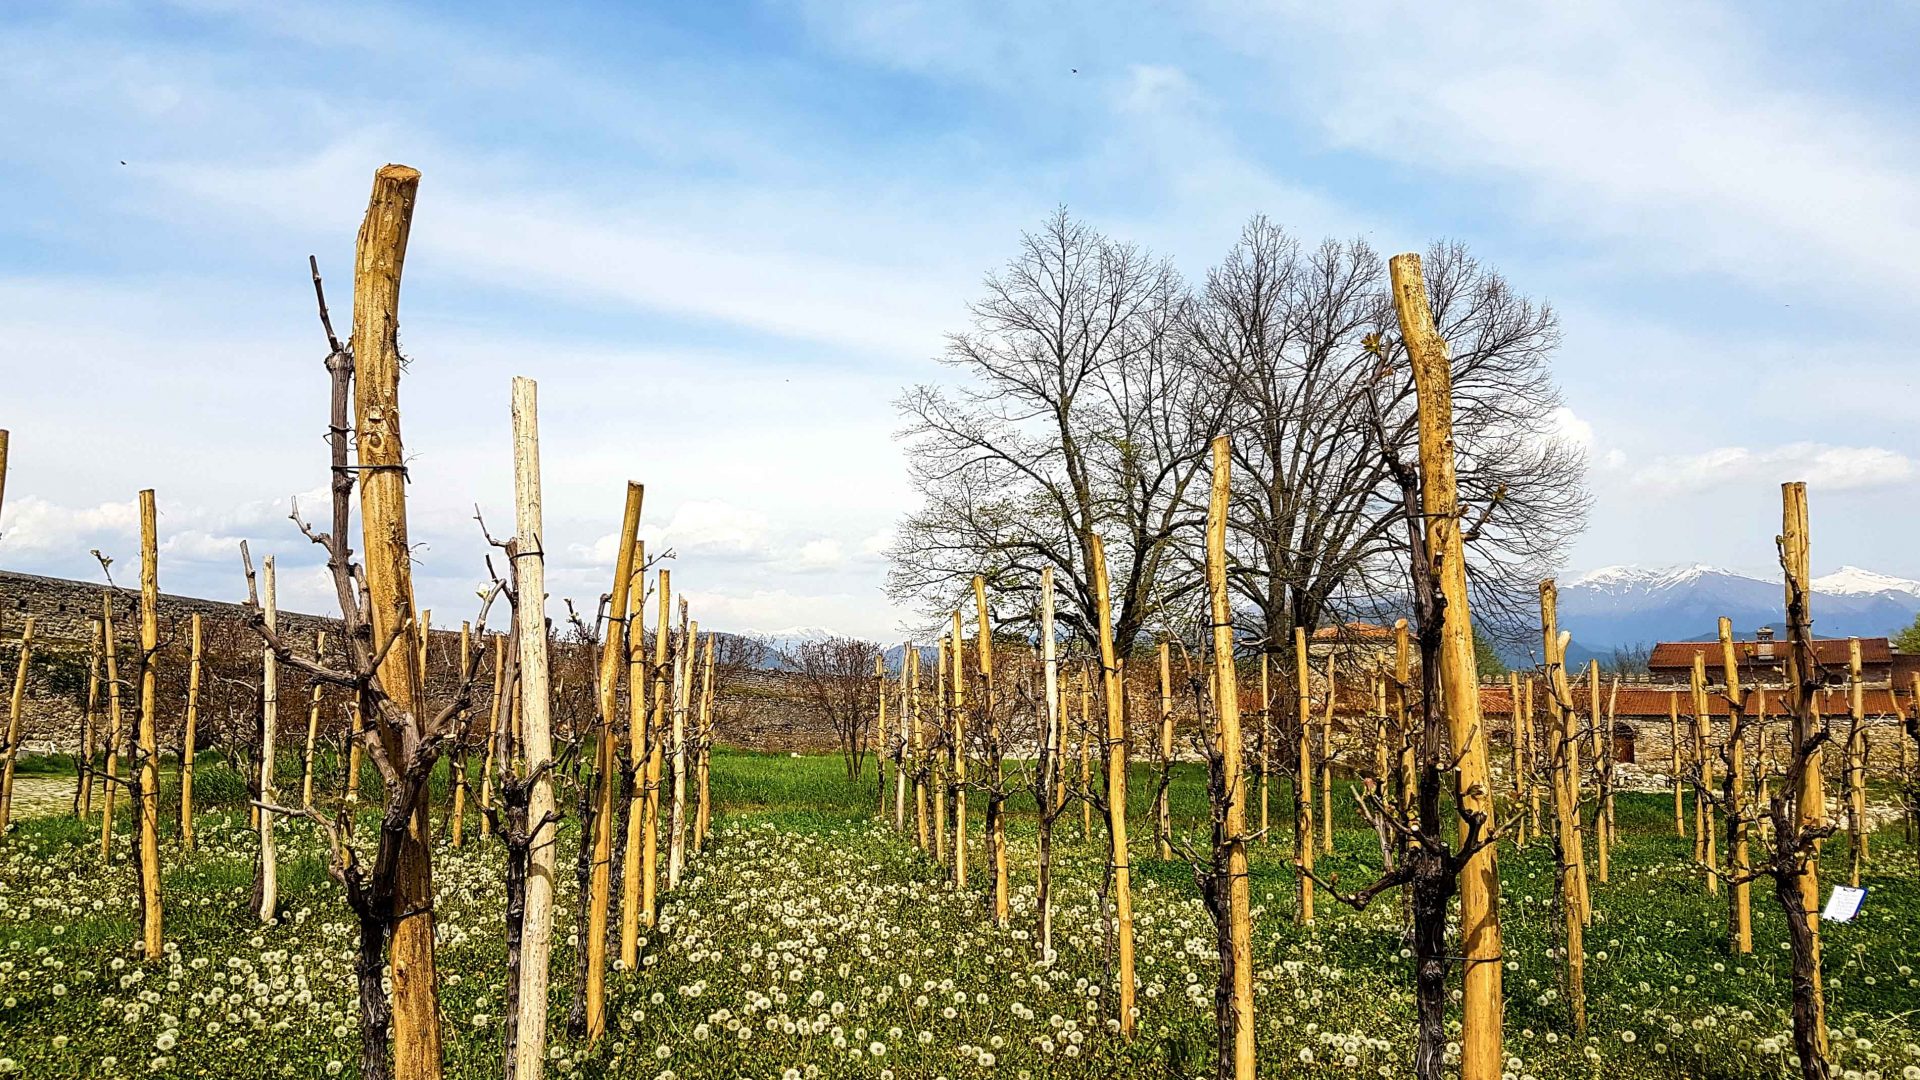 A vineyard of Saperavi grapes in Georgia.